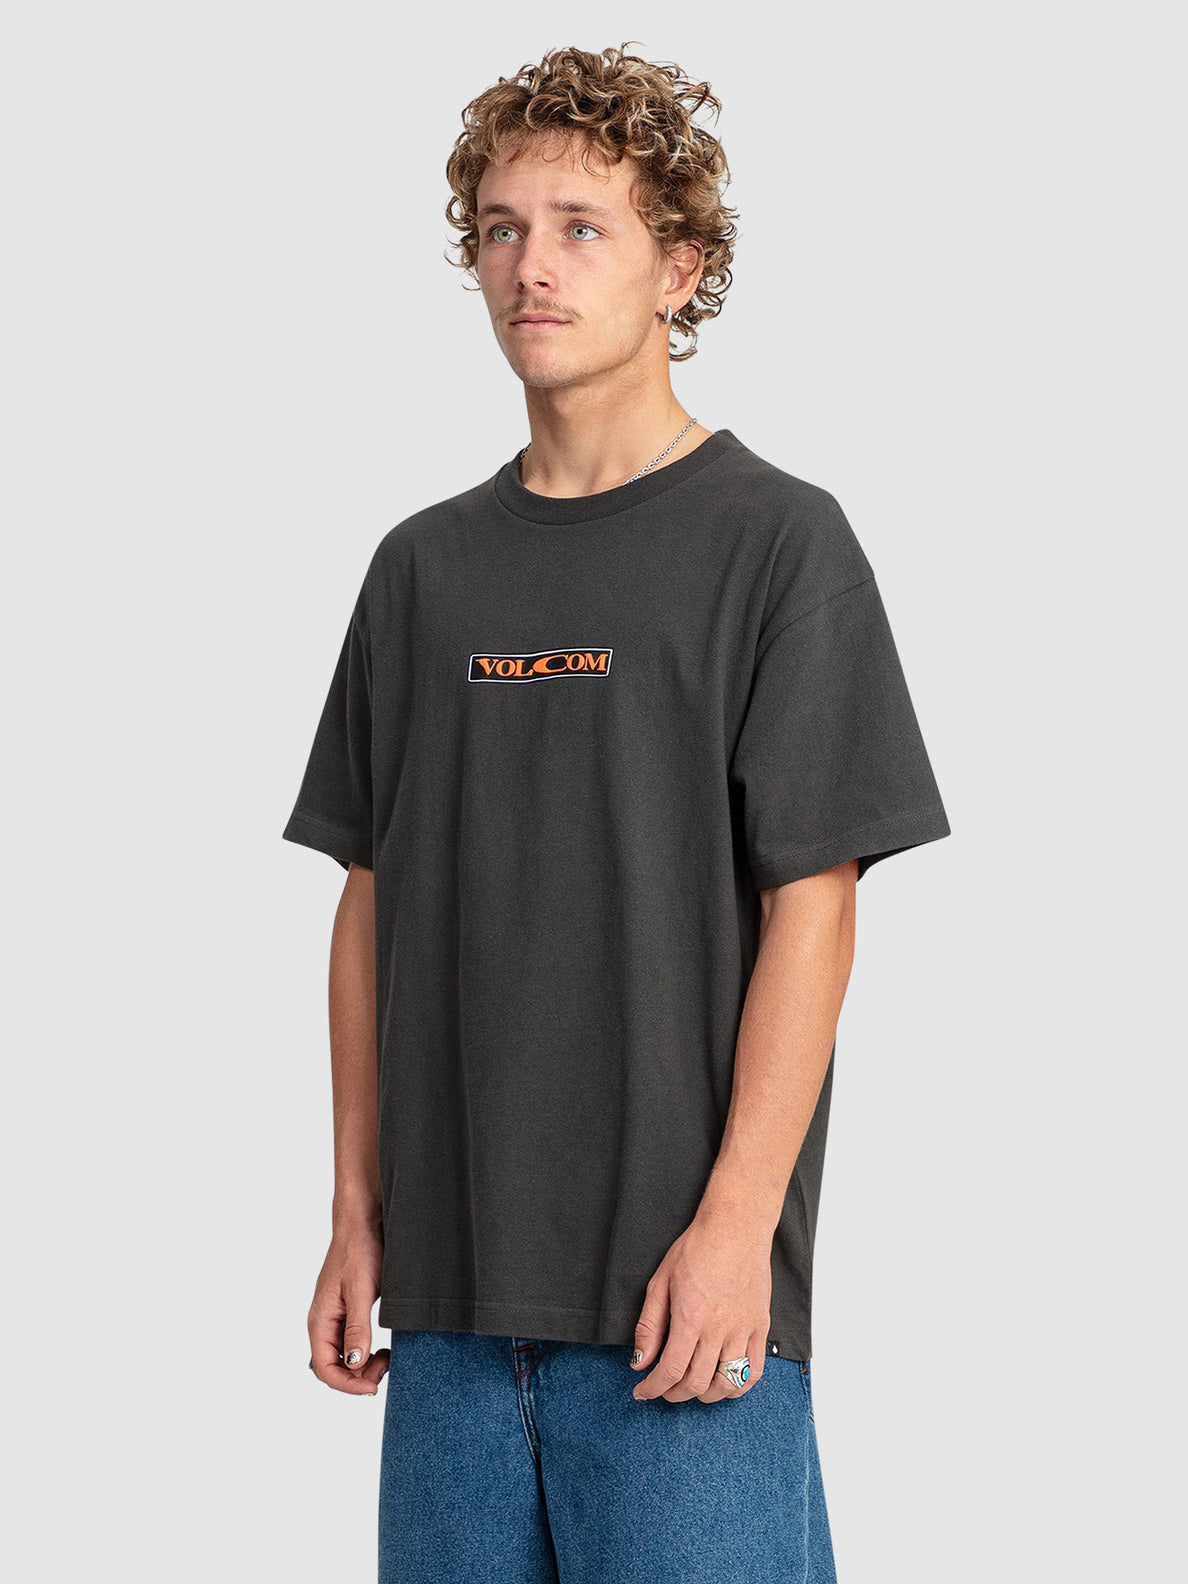 Ozcorpo Short Sleeve Lse T-Shirt - Stealth (A4342372_STH) [1]